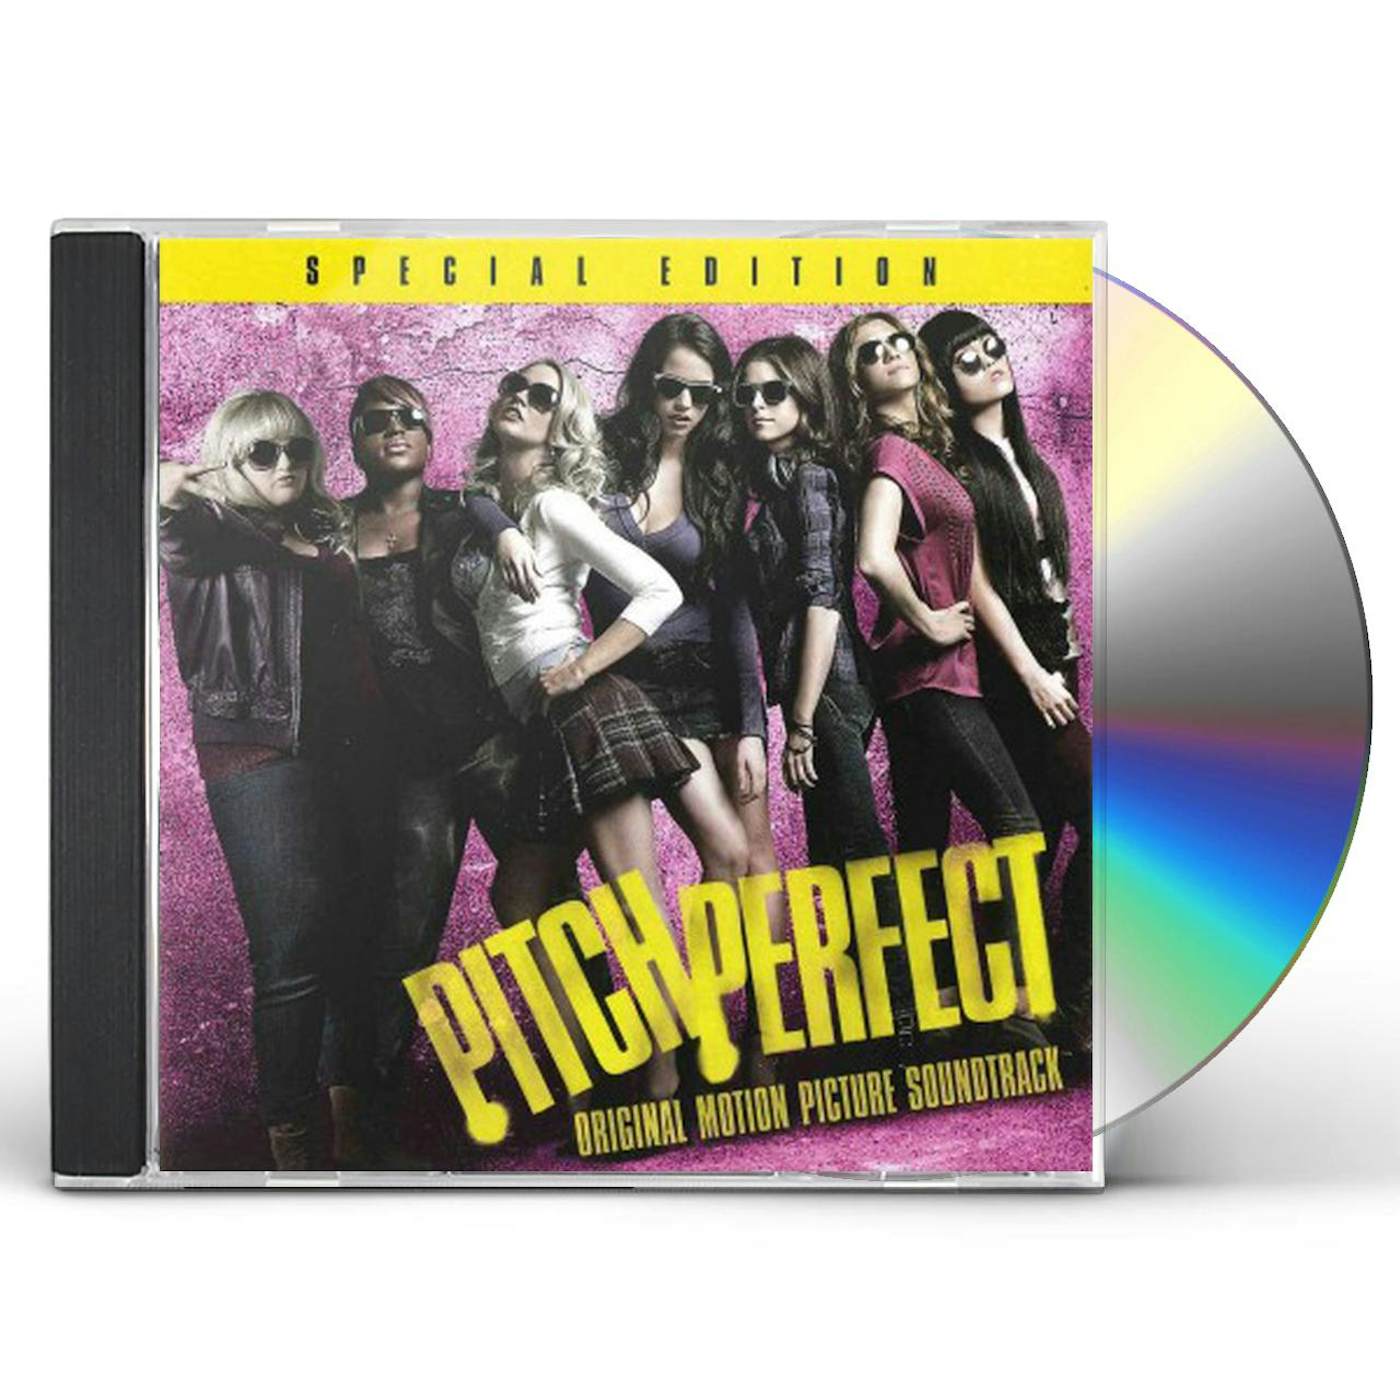 PITCH PERFECT / Original Soundtrack CD